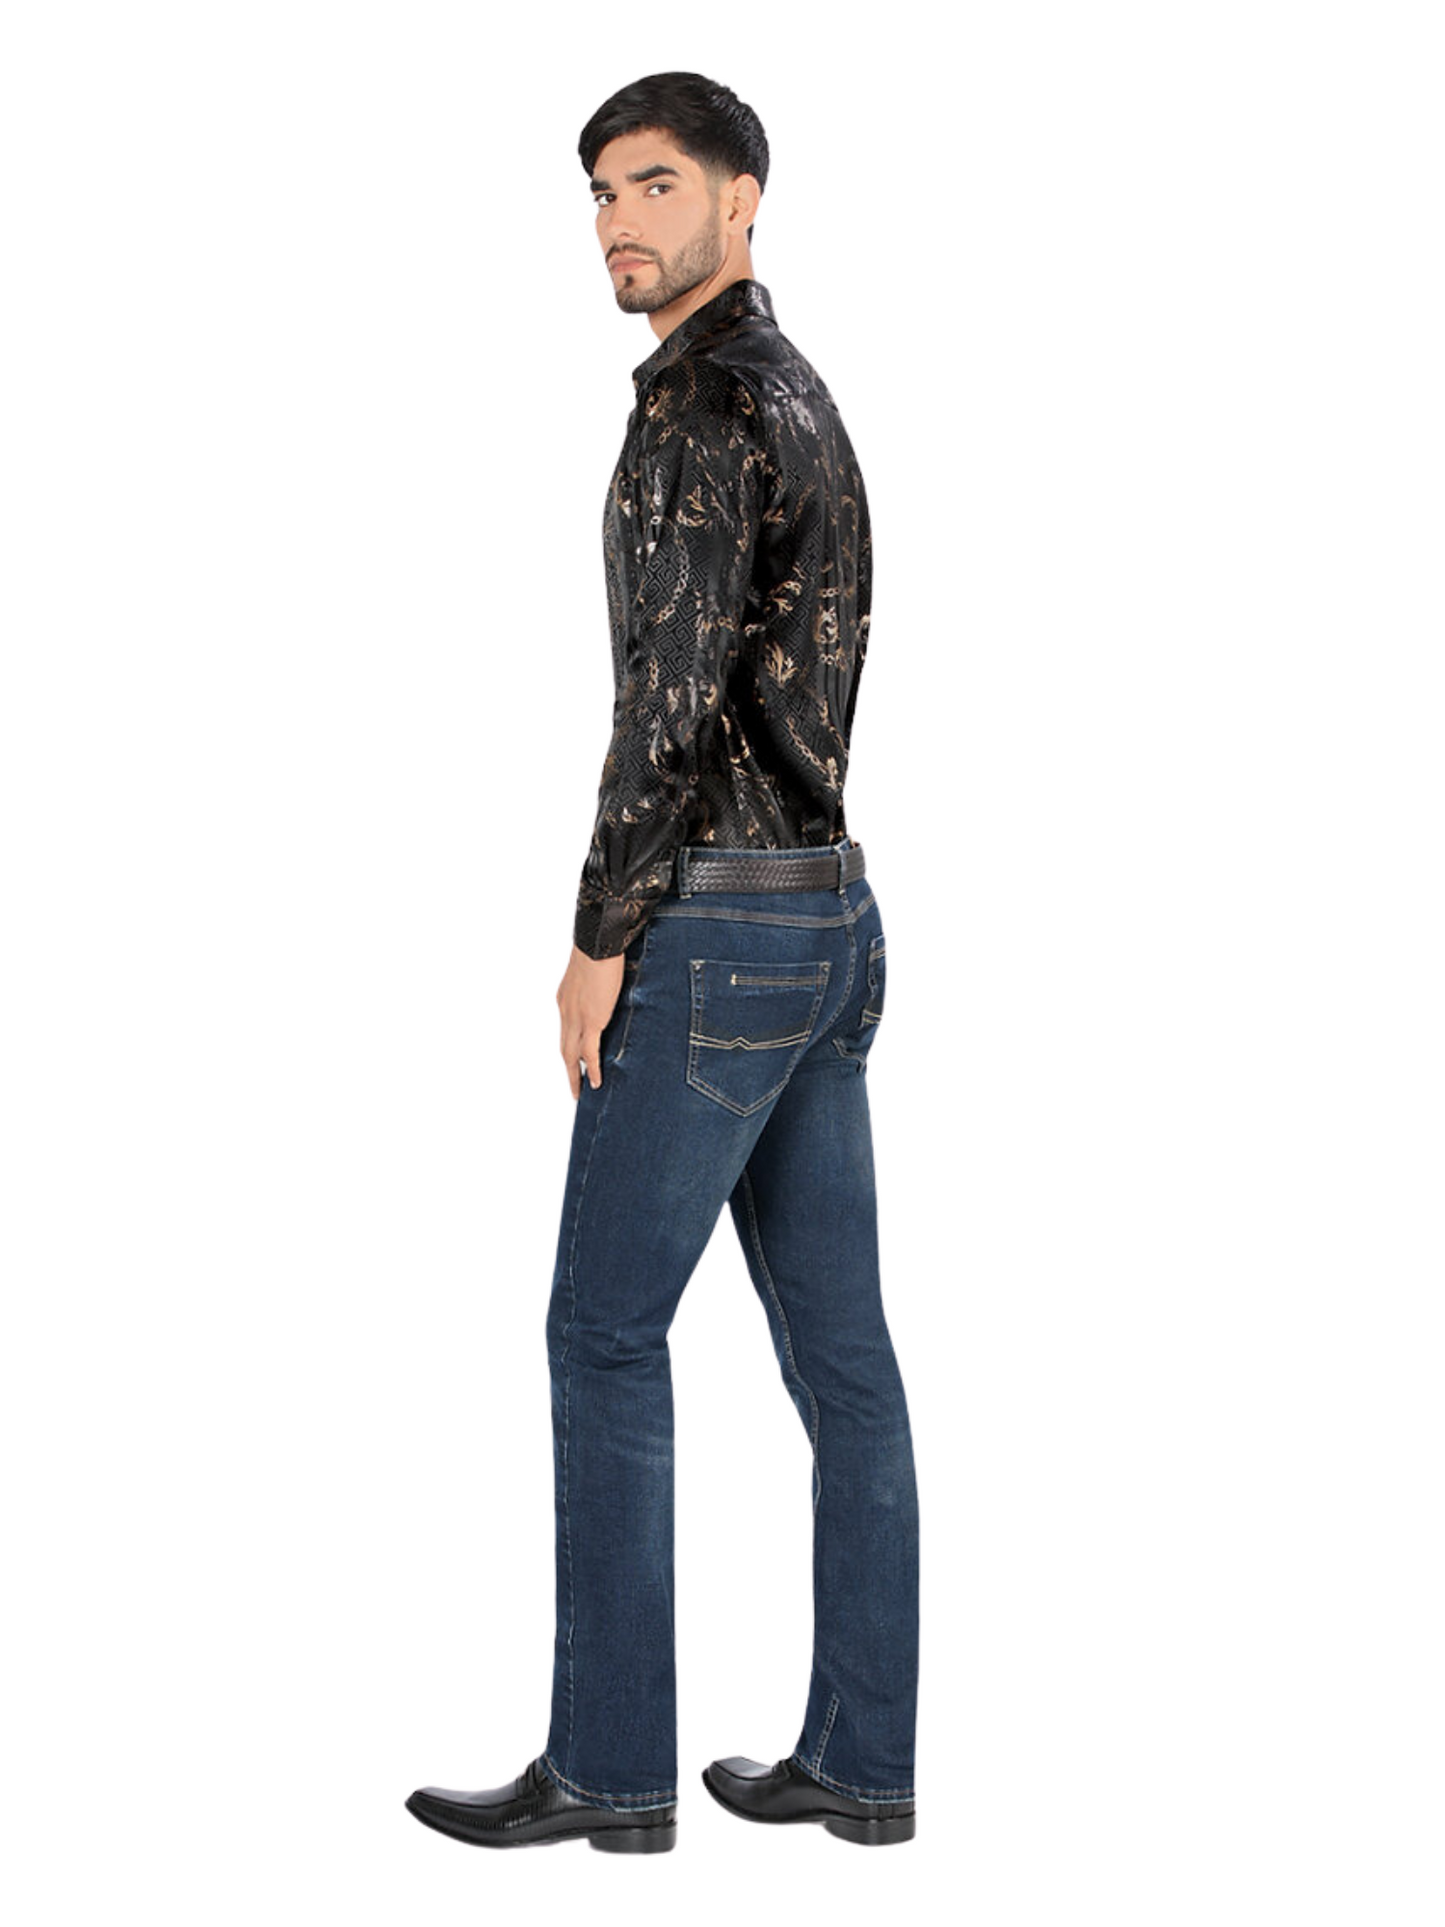 Stretch Denim Jeans for Men 'Montero' - ID: 5309 Denim Jeans Montero